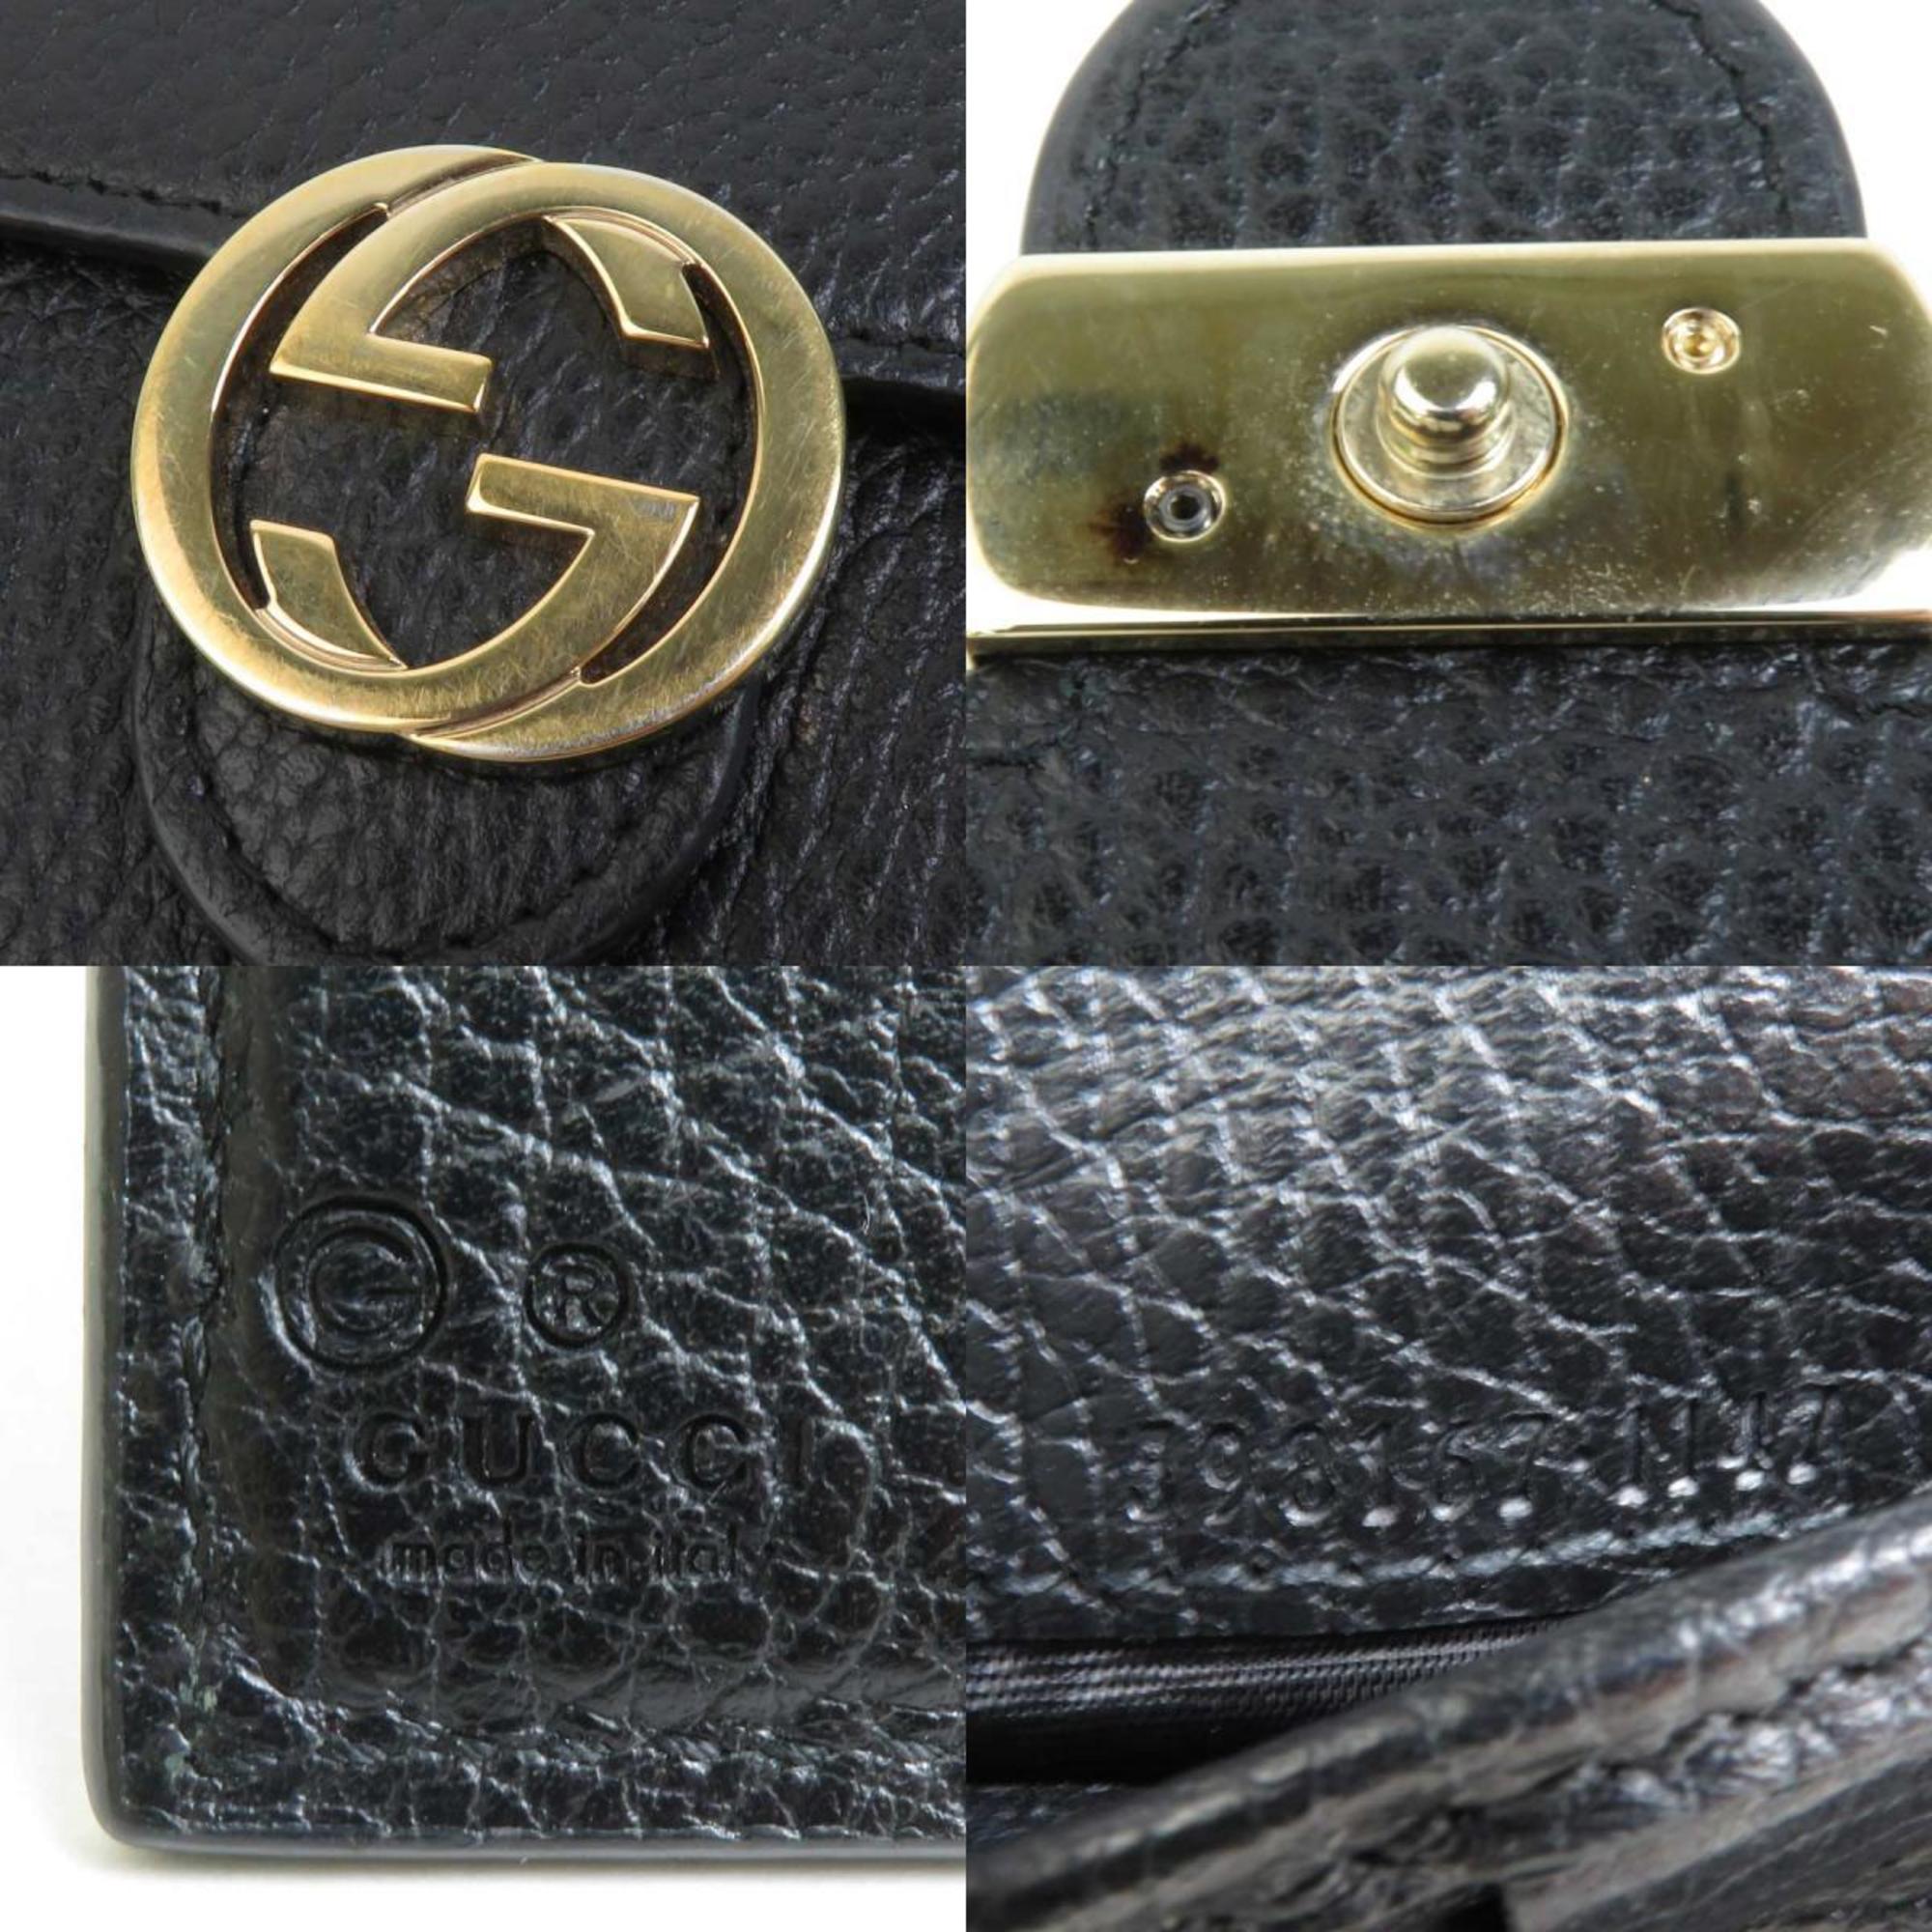 GUCCI Bi-fold wallet Interlocking G Leather Black Men's Women's 598167 h30315f